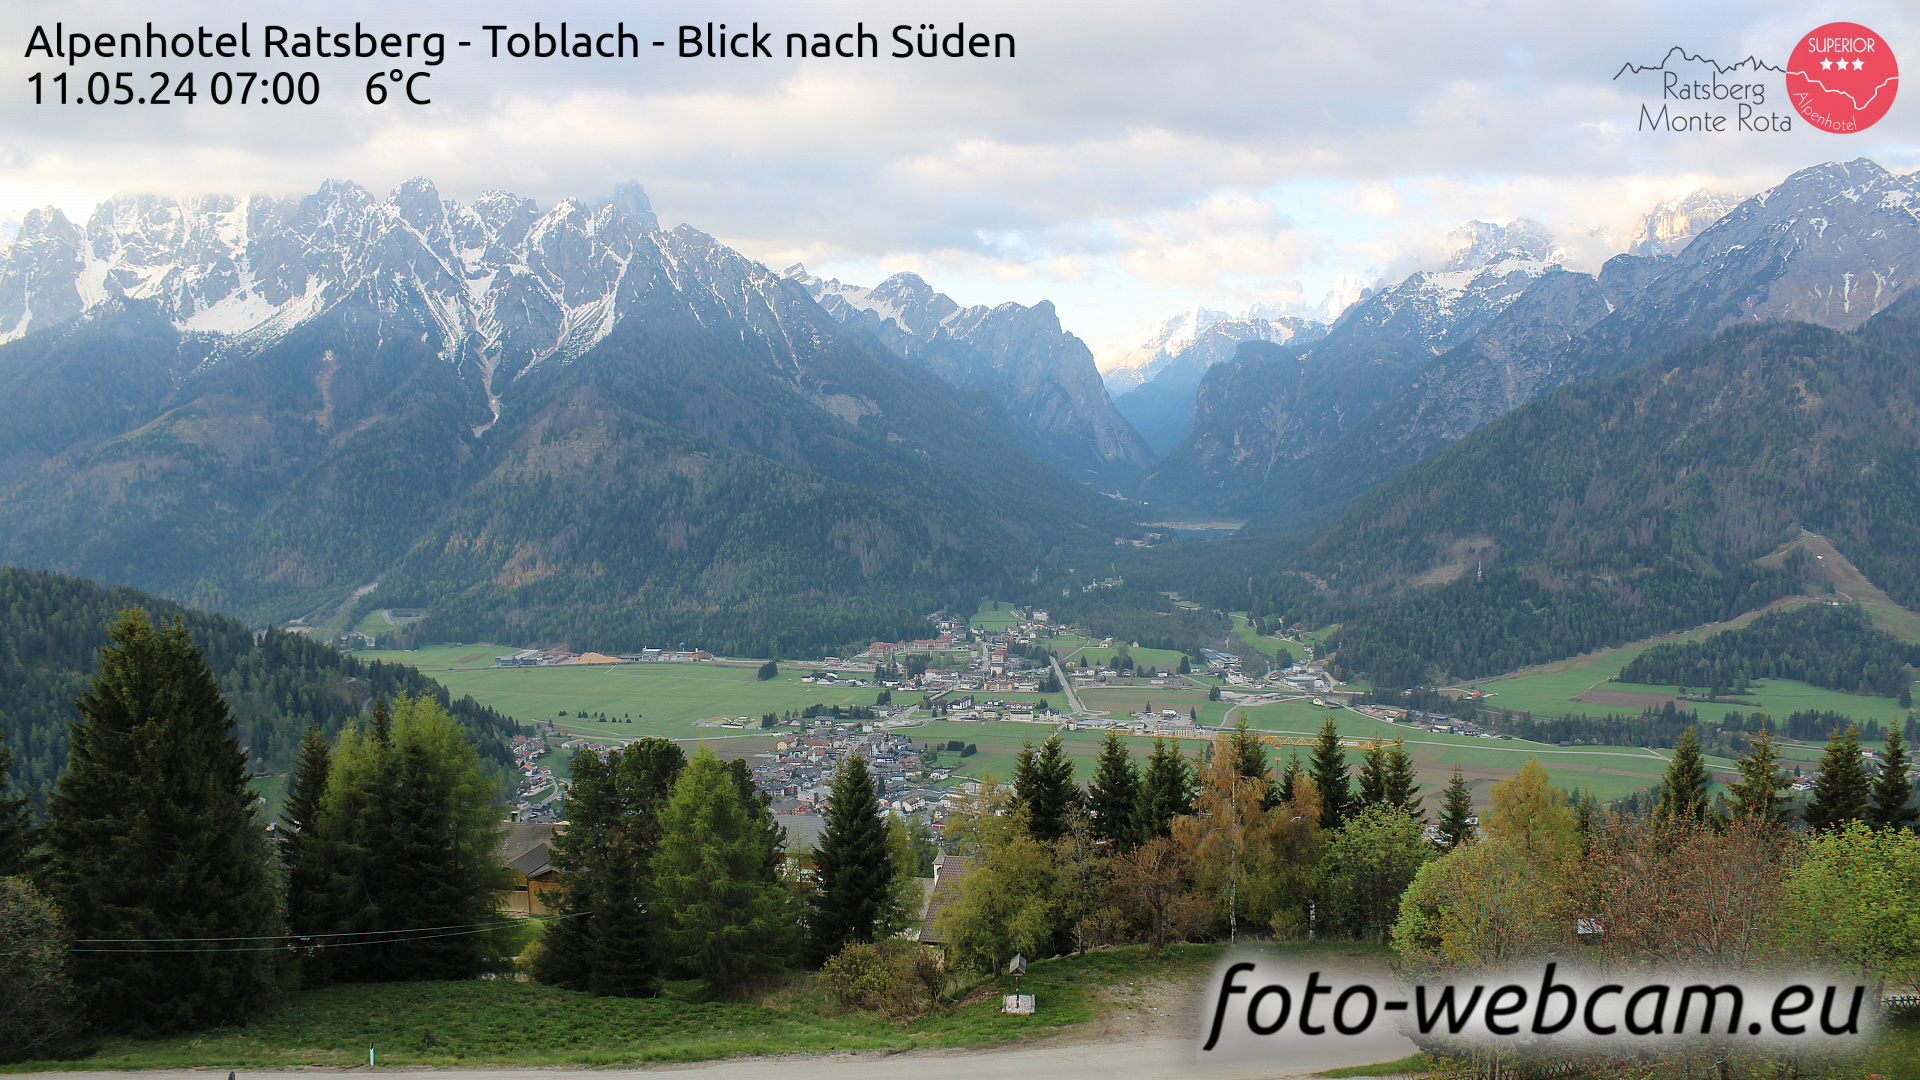 Toblach (Dolomites) Thu. 07:03